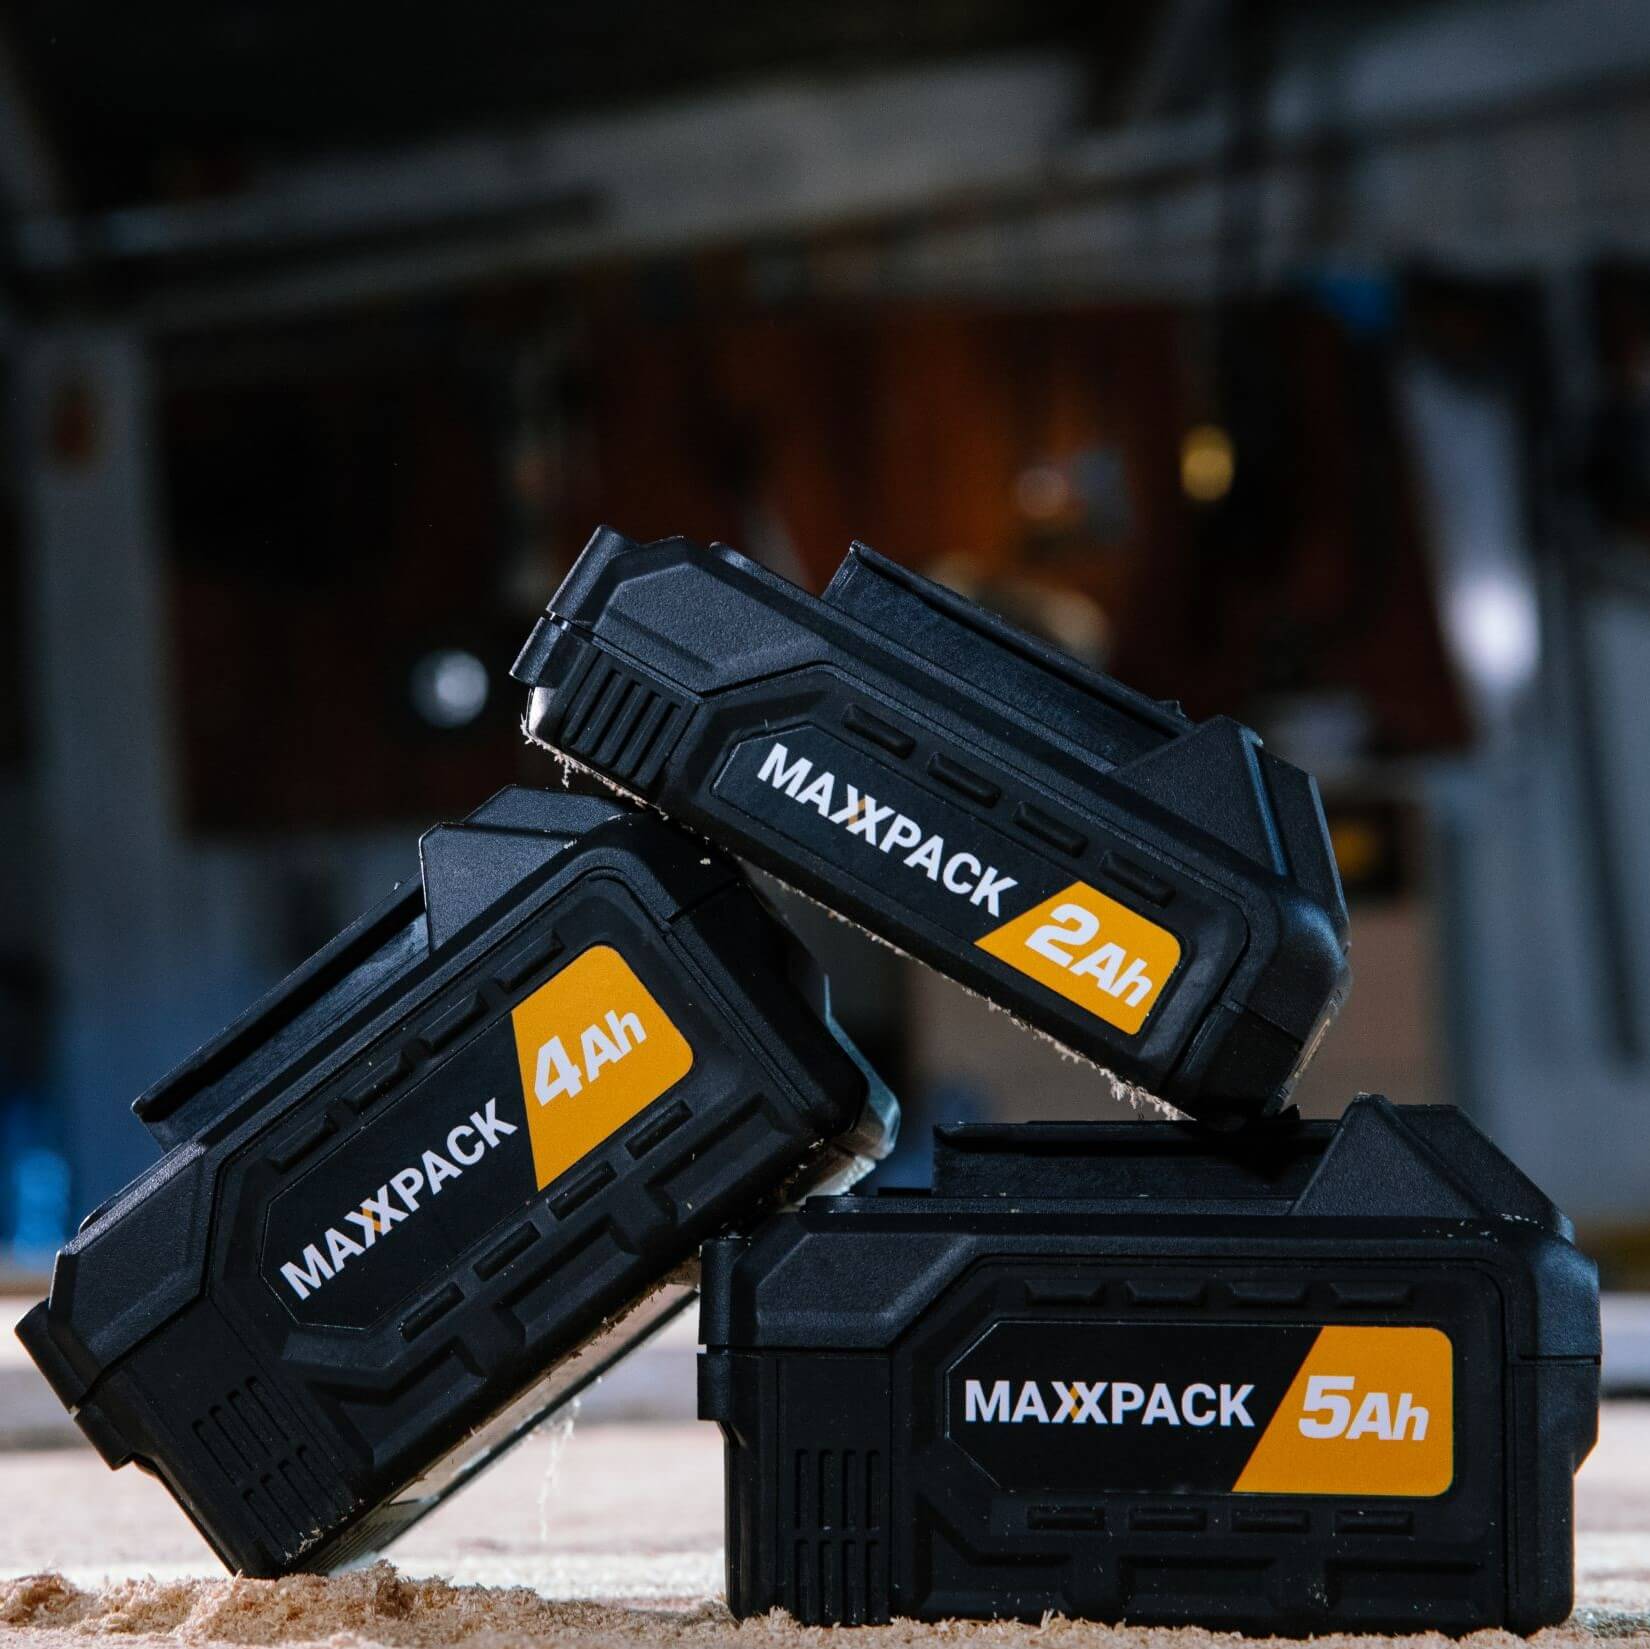 Universal Power Tool Batteries | 18V Maxxpack collection | Batavia